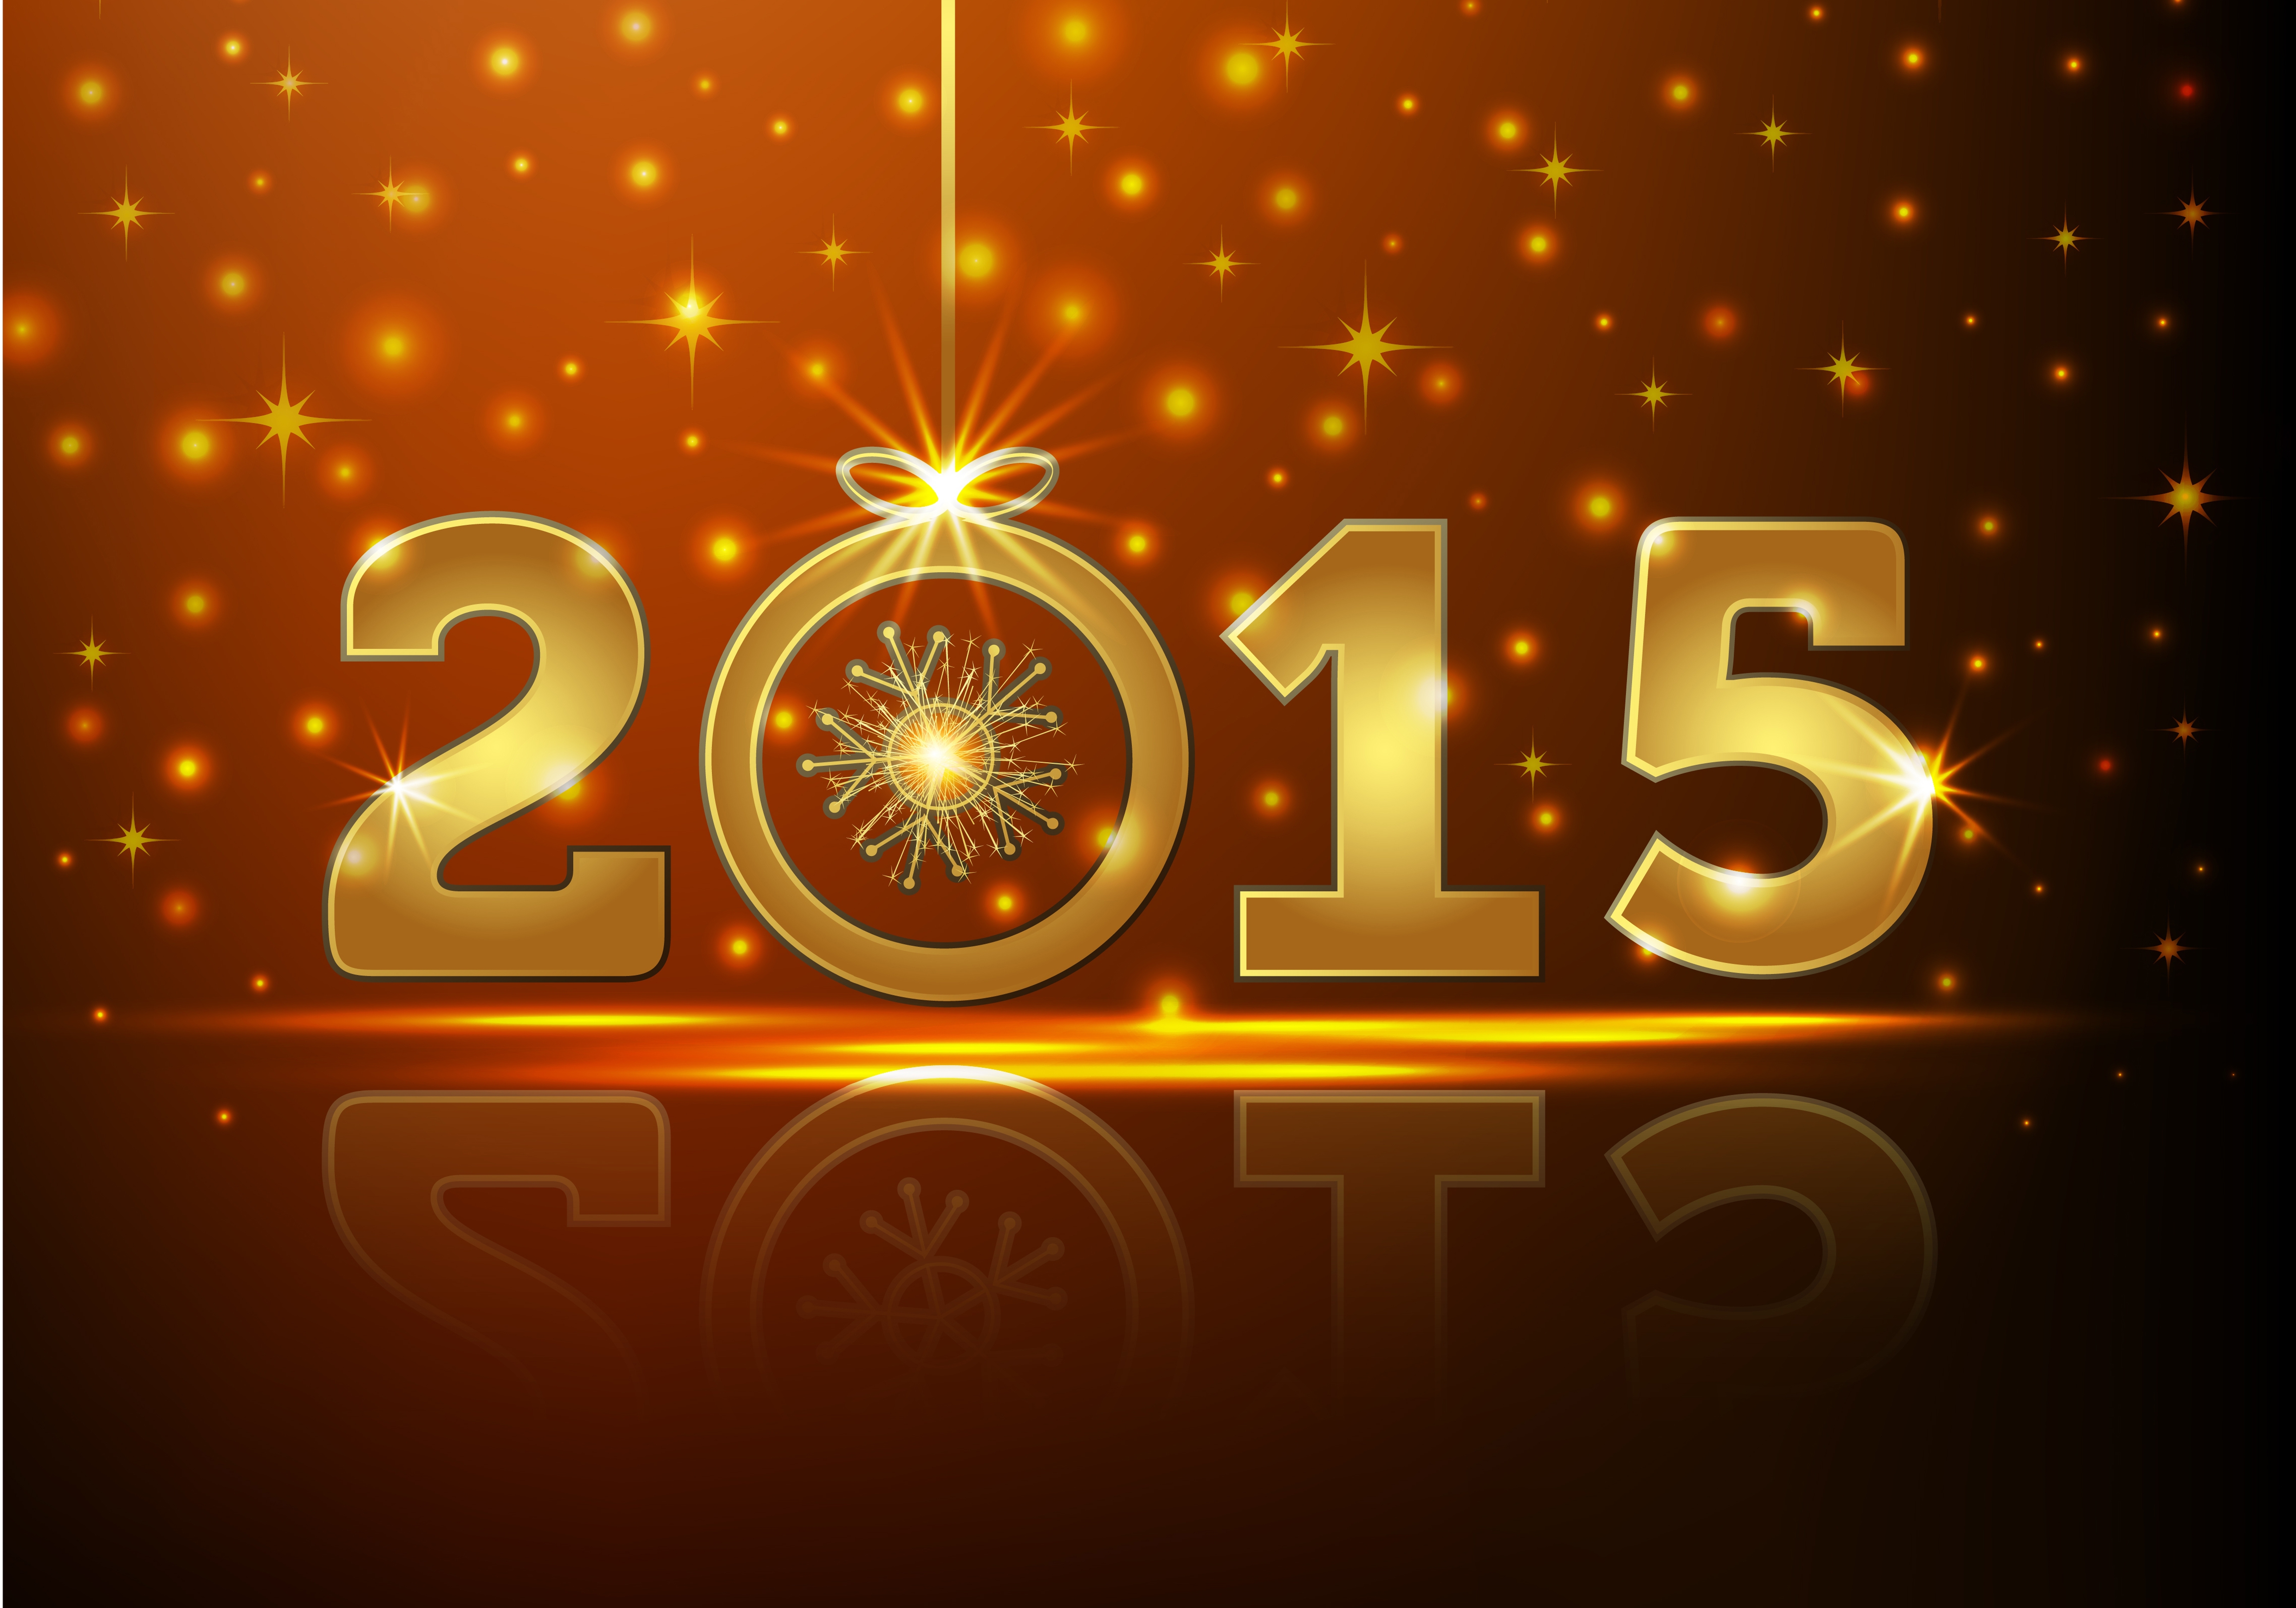 New year riches. С новым годом 2015. Новый год 2014. Новый год 2015. 2014 Год картинка.